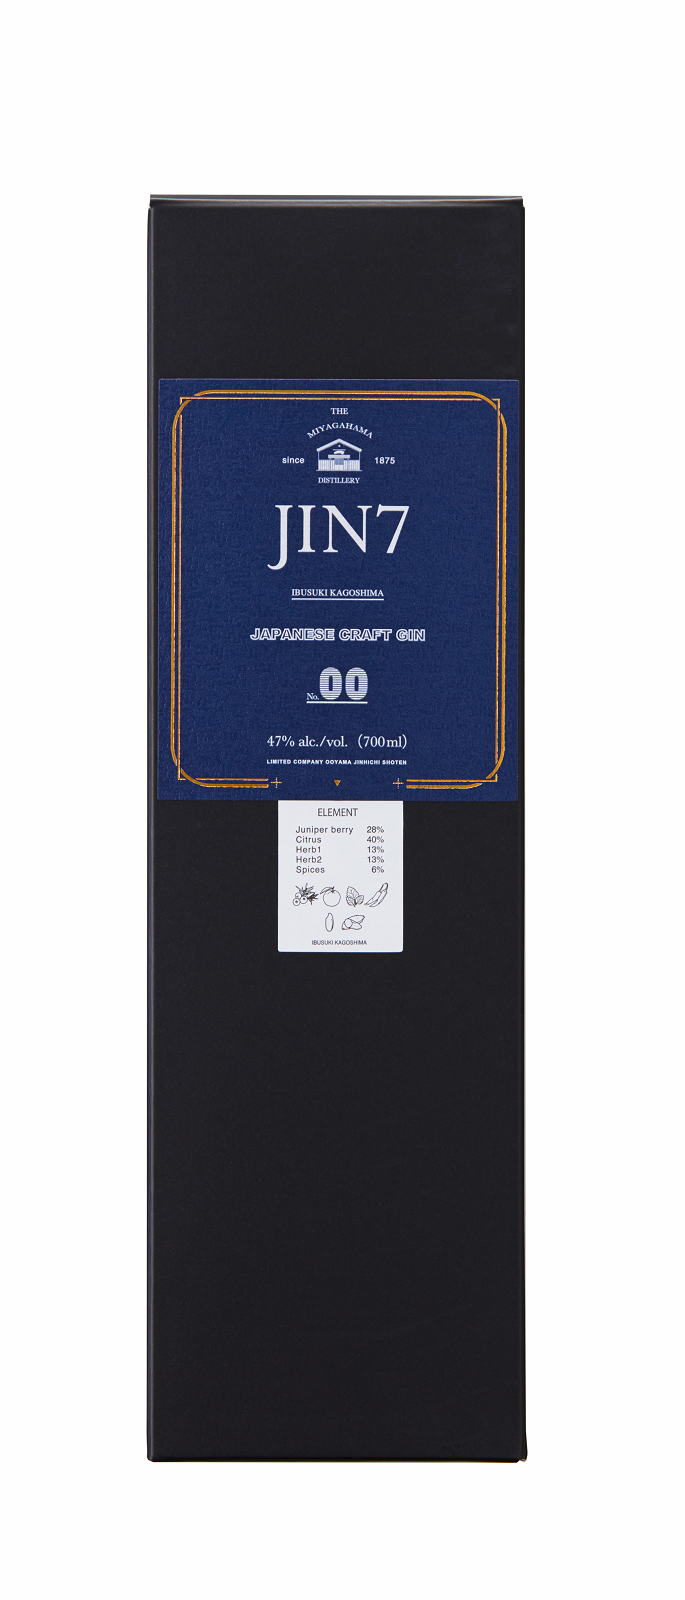 Jin7 Series 00